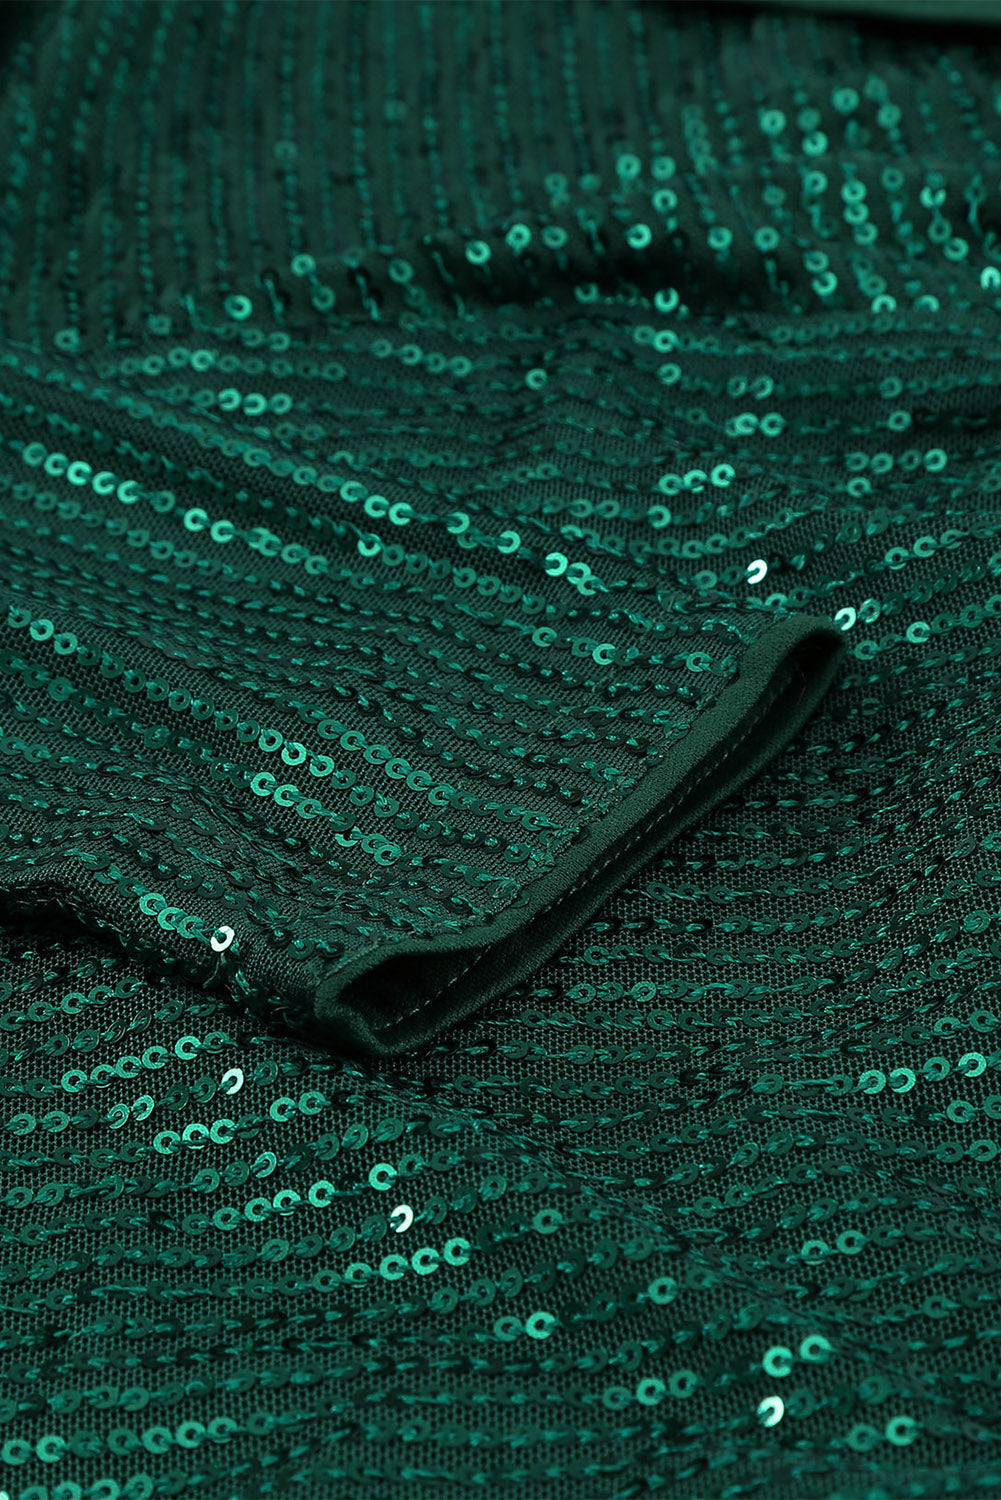 Green Sequin Deep V Neck Side Shirring Long Sleeve Mini Dress